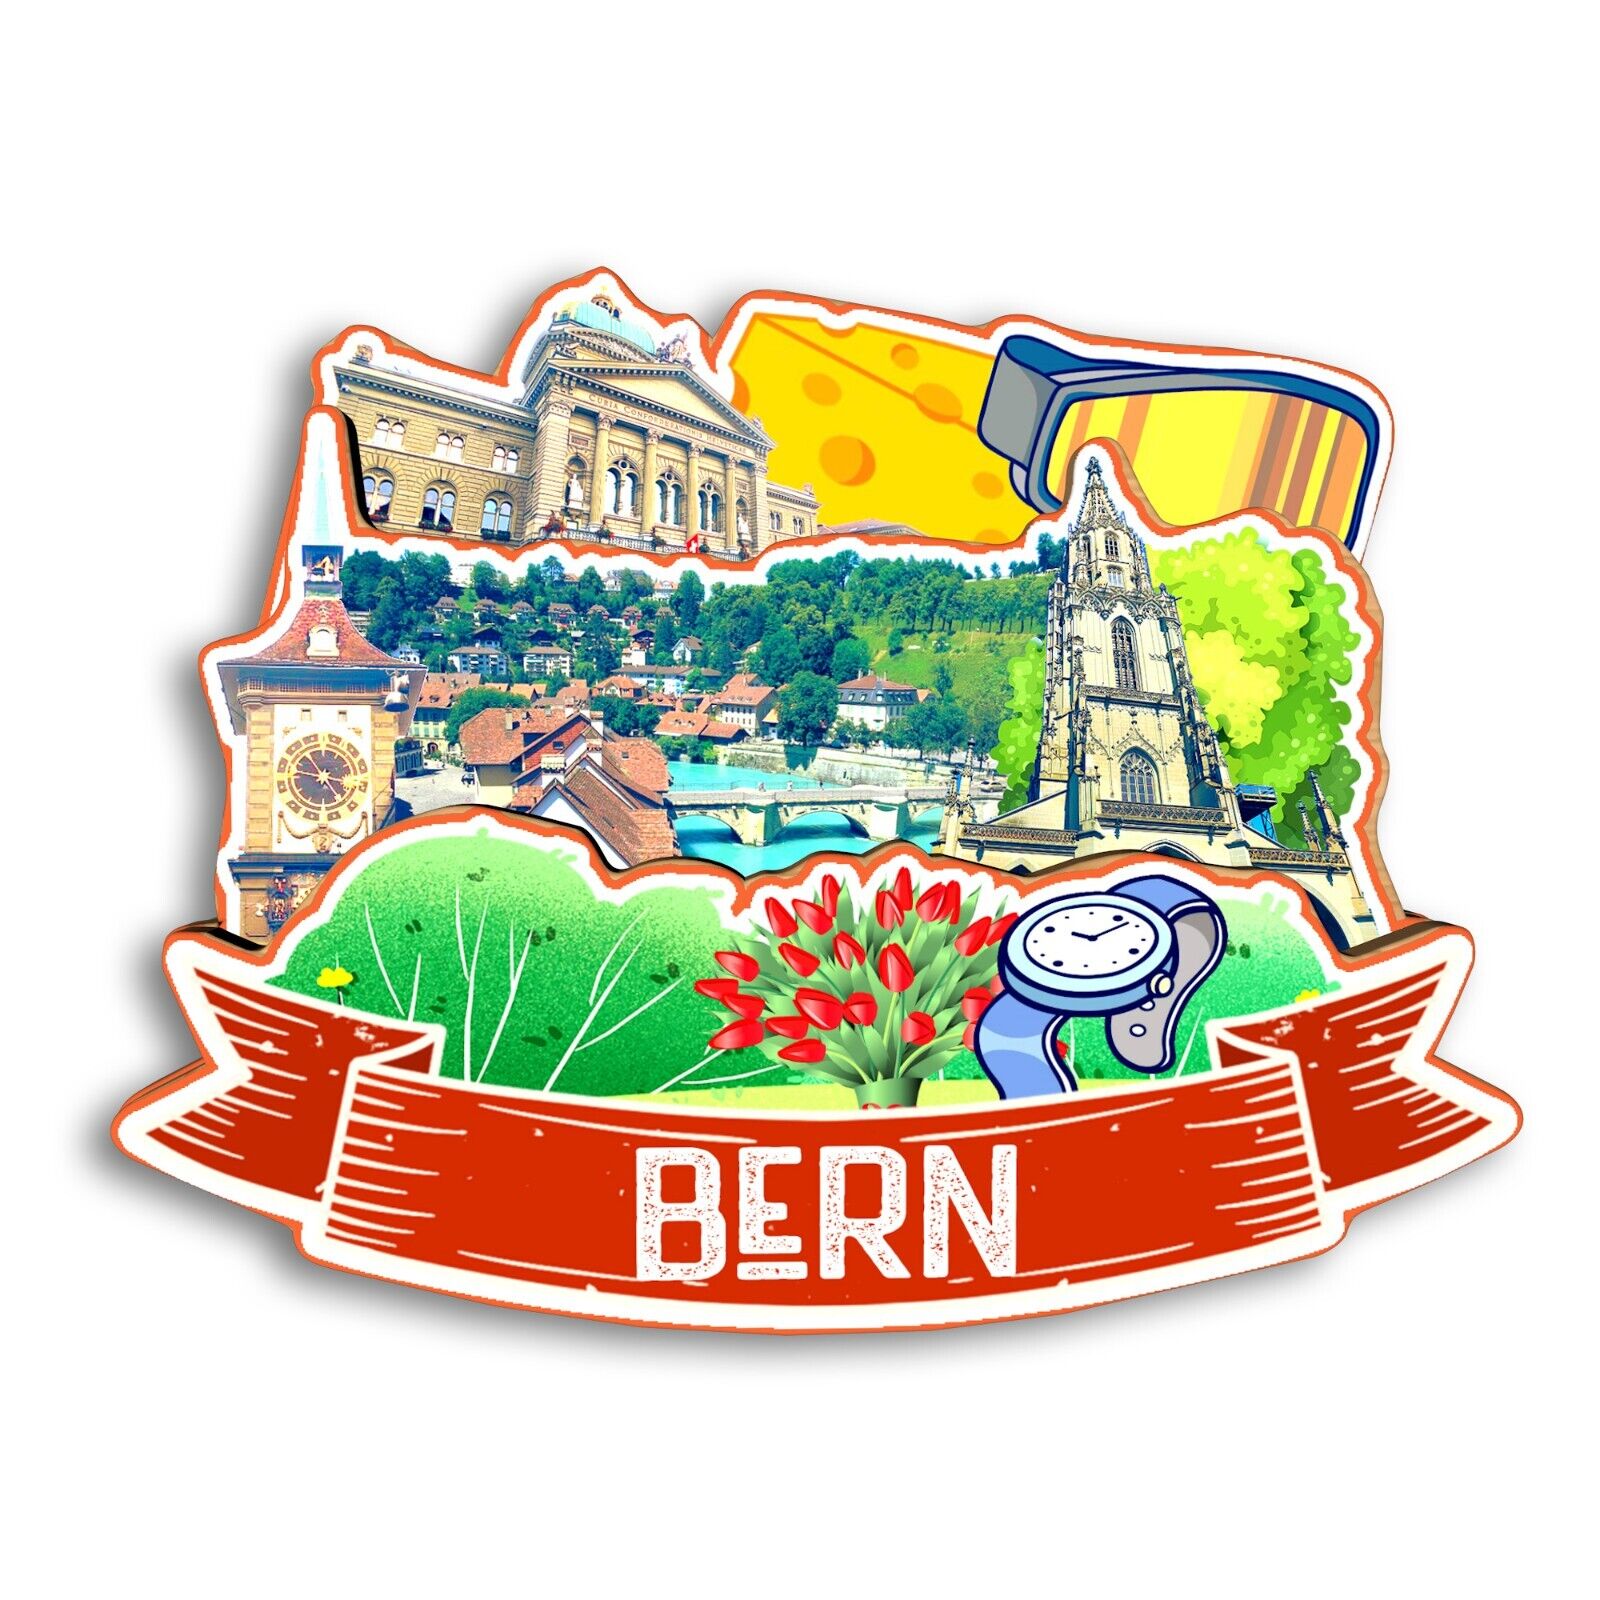 Bern SWITZERLAND Refrigerator magnet 3D travel souvenirs wood craft gifts